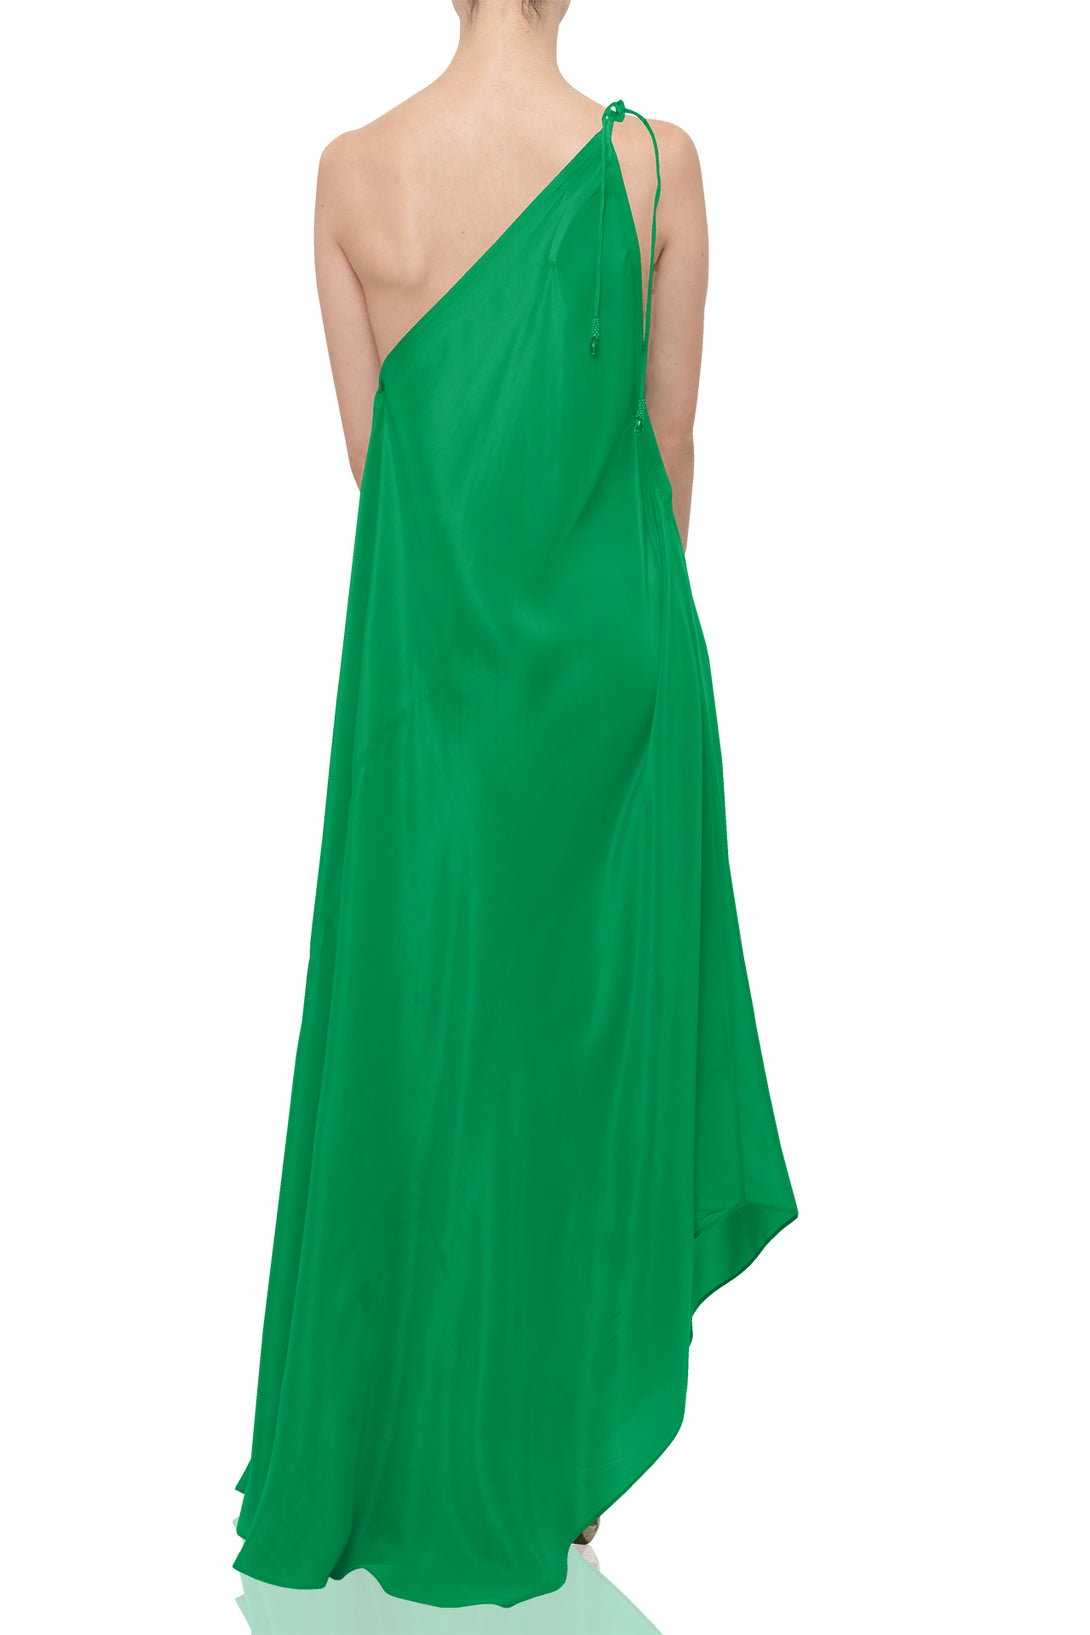  green cocktail dress, Shahida Parides, beach maxi dress, long summer dresses, backless maxi dress,